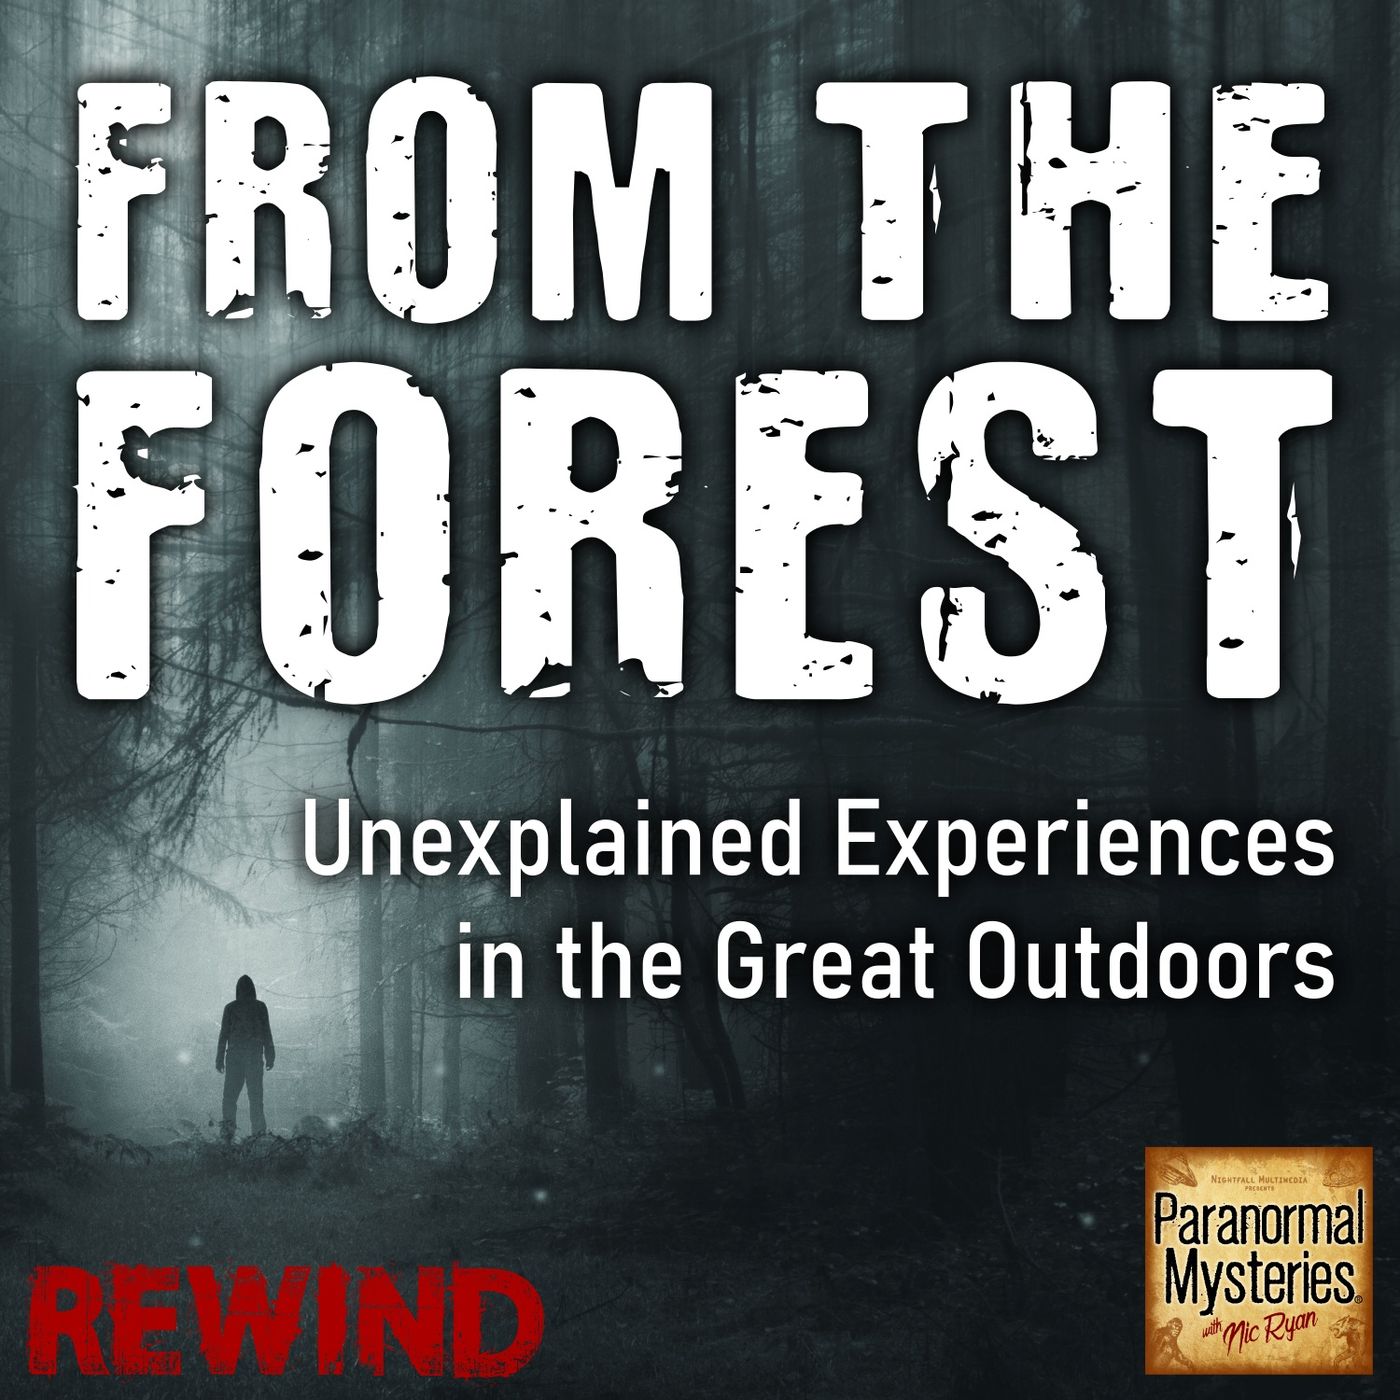 {RW} Hunter Encounters Creature, Entity In Michigan Woods & Native American Curse (ep252)